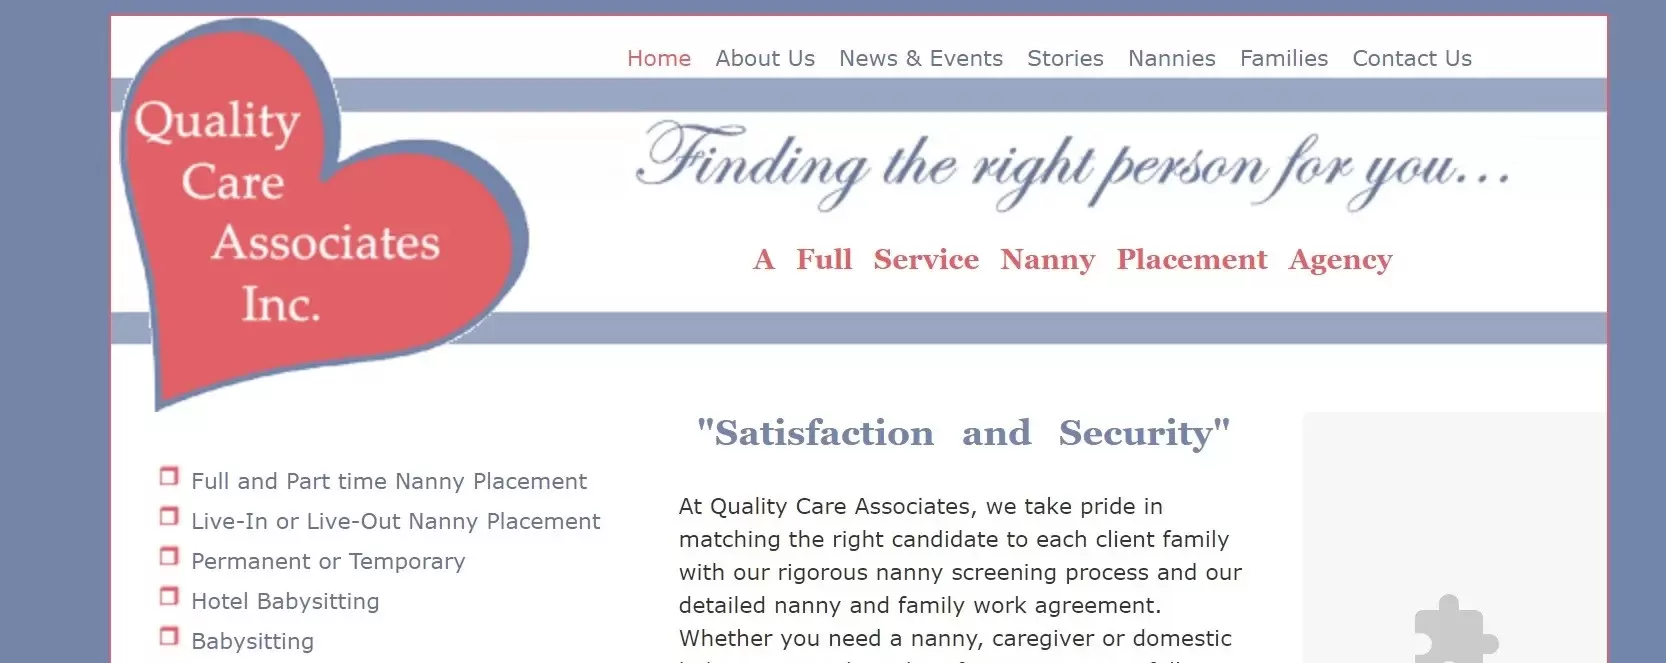 Quality Care Associates company profile and review